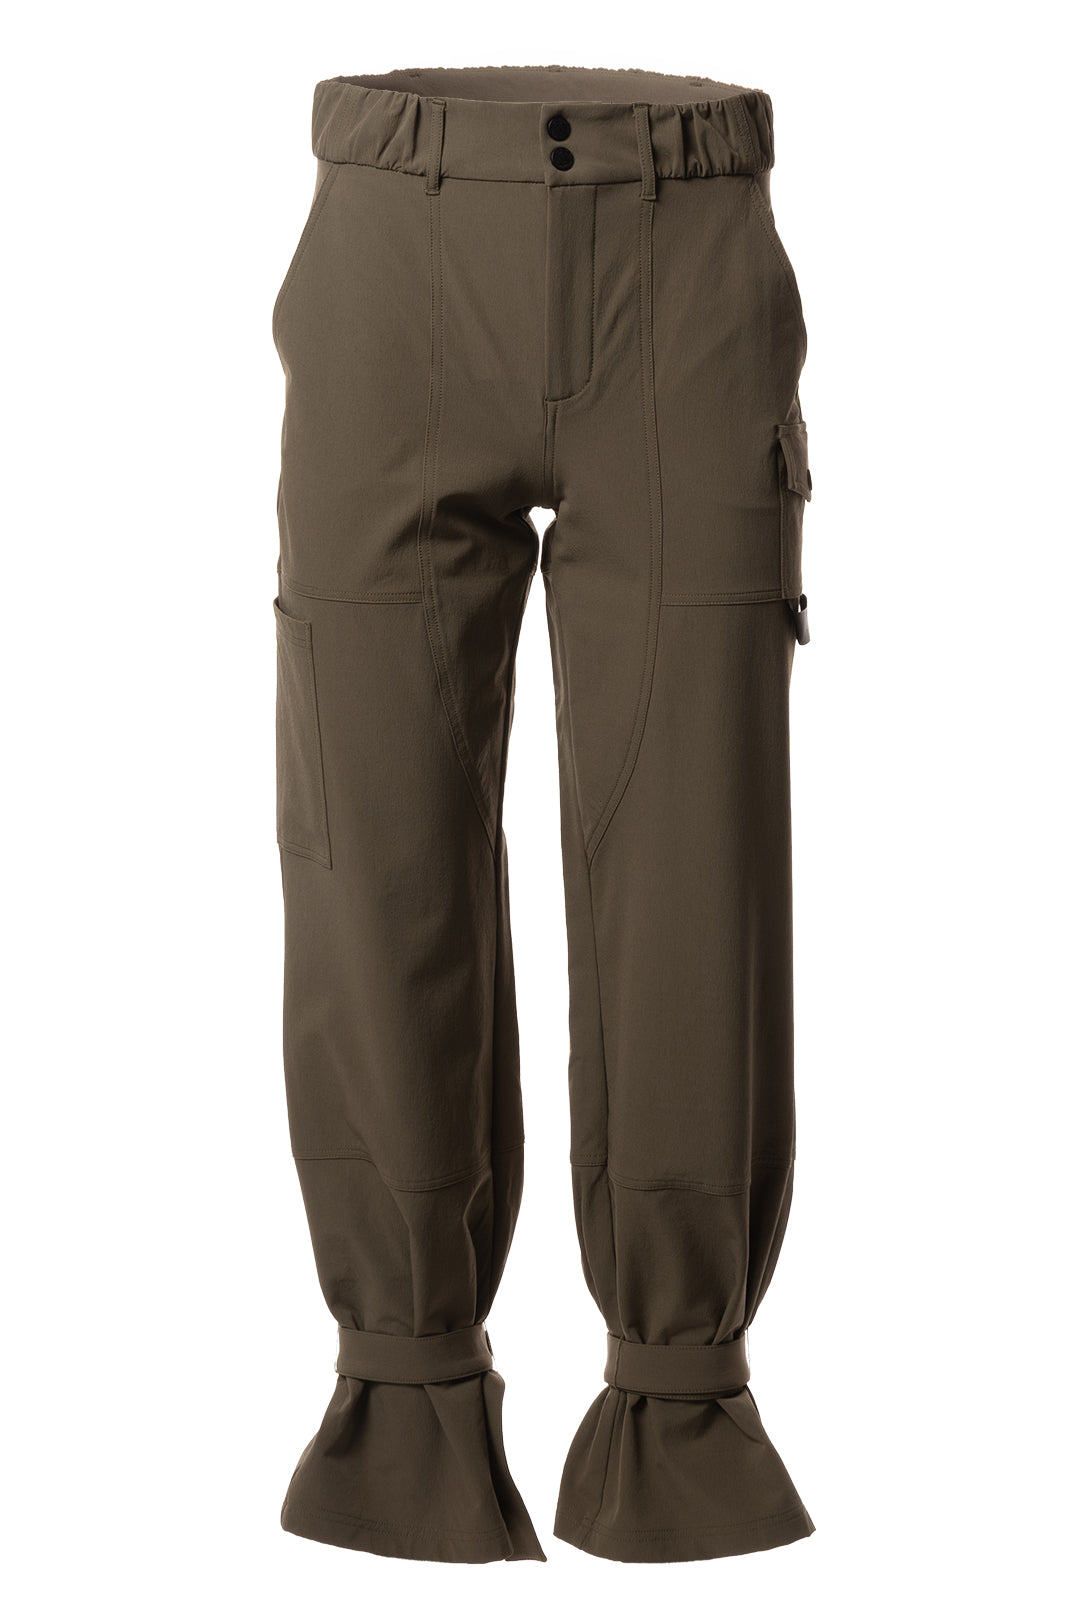 Khaki-green pants with adjustable ankles | Raina